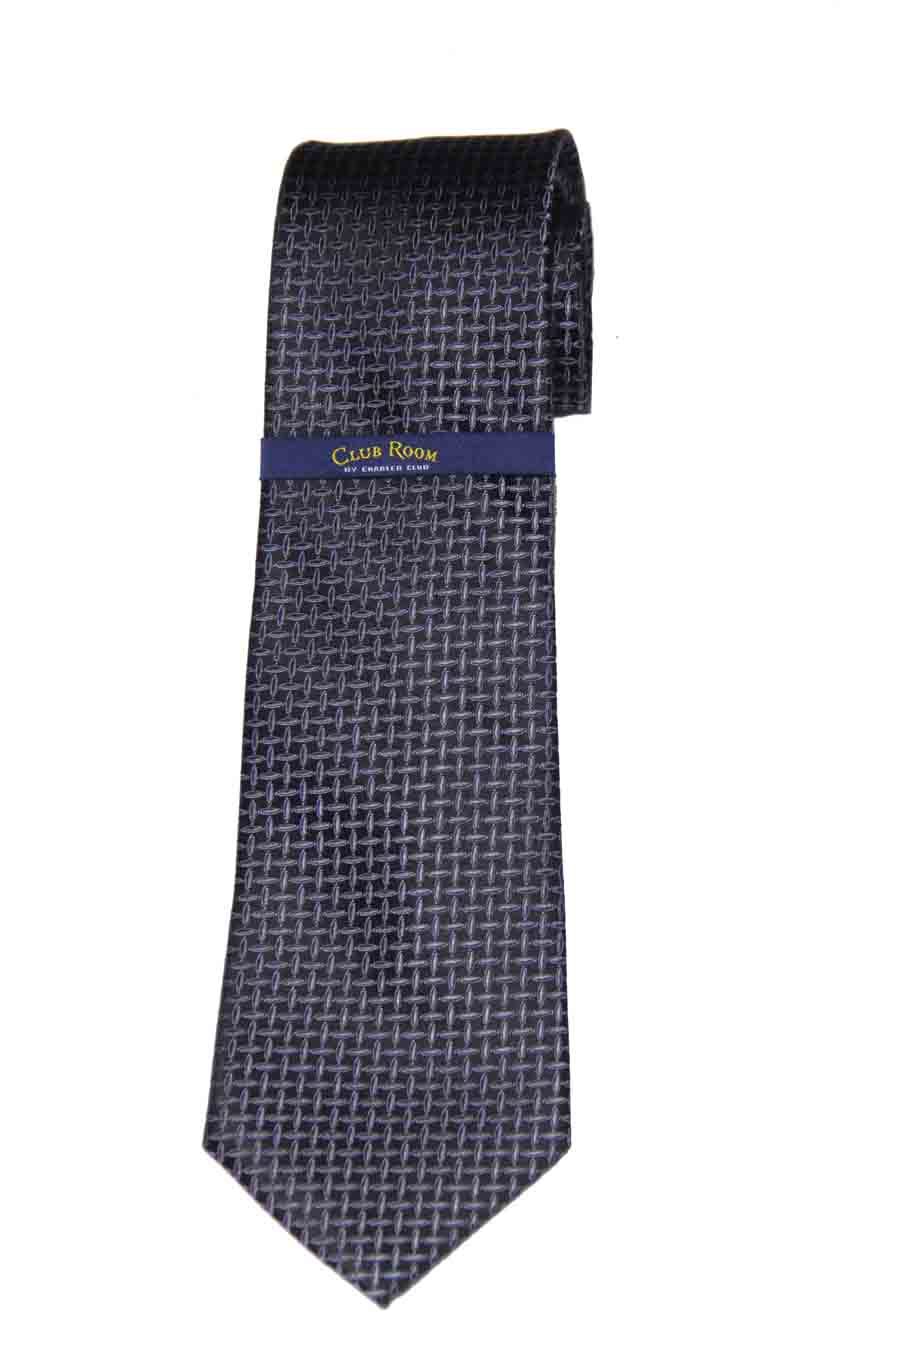 Club Room Neck Tie Silk Black Navy Blue Geometric Pattern Men's Classic